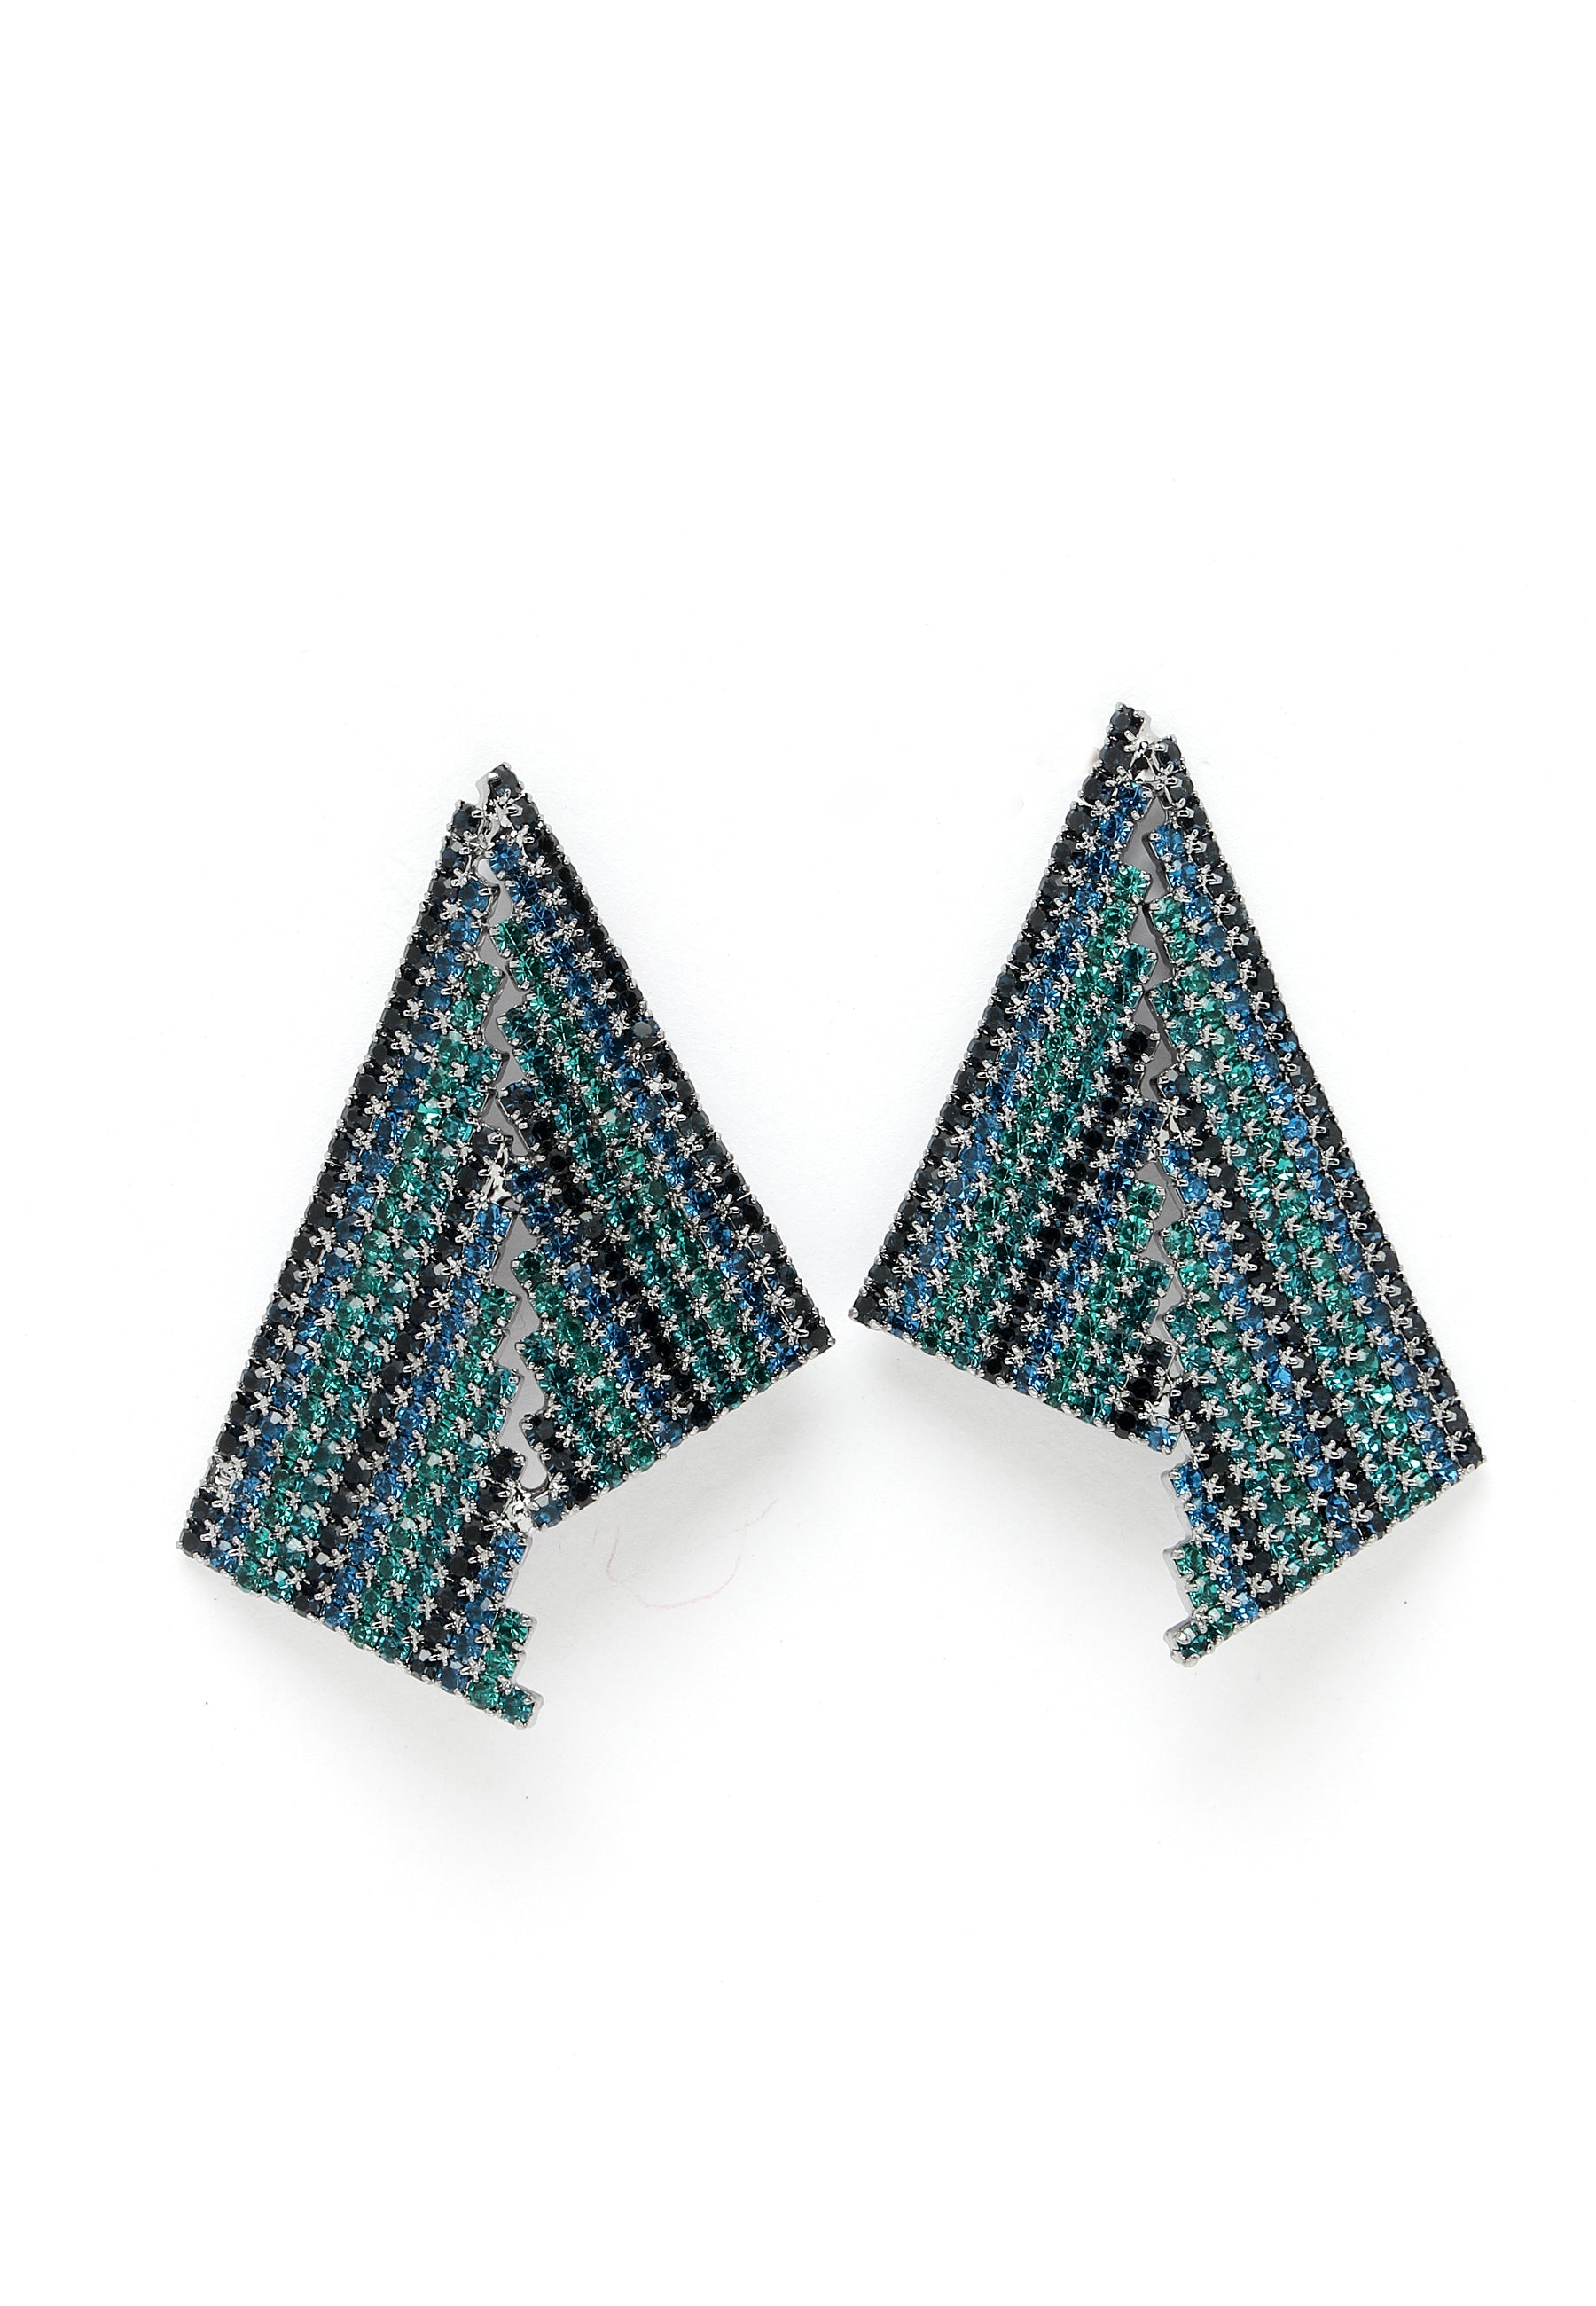 Avant-Garde Paris Asymmetrical Triangle Blue Crystal Earrings